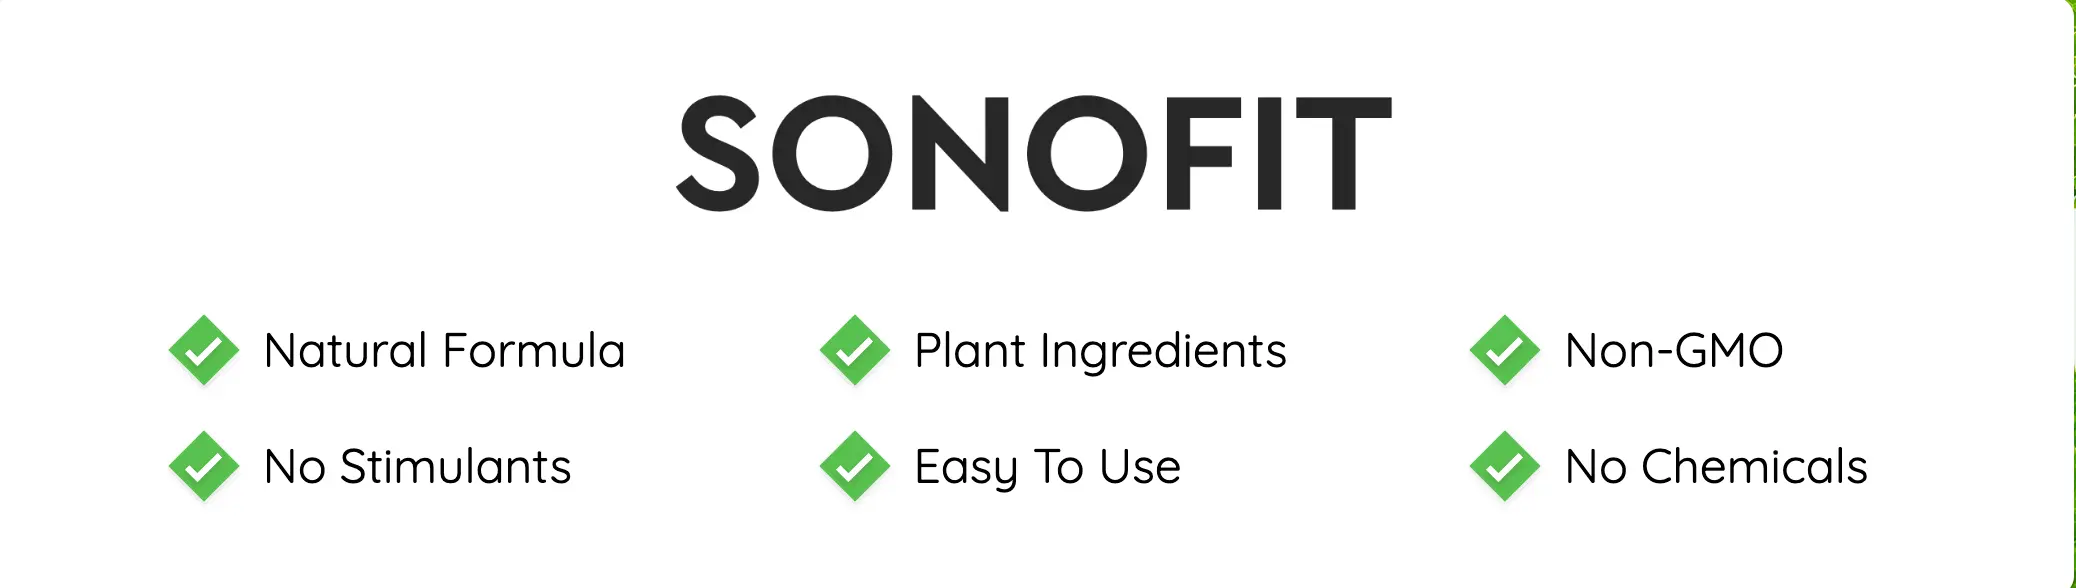 sonofit-ingredients